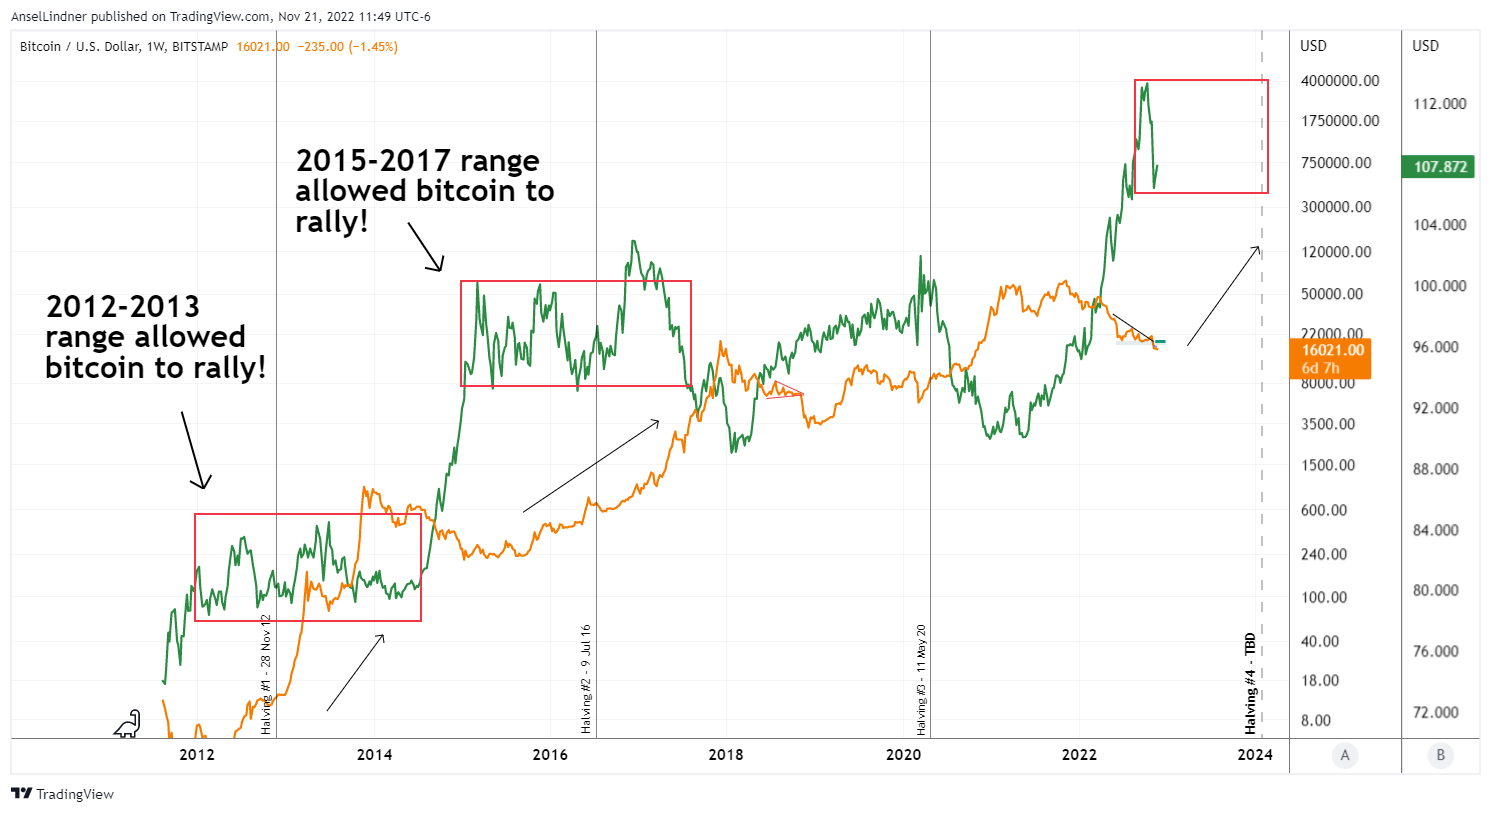 Bitcoin price versus DXY range bound